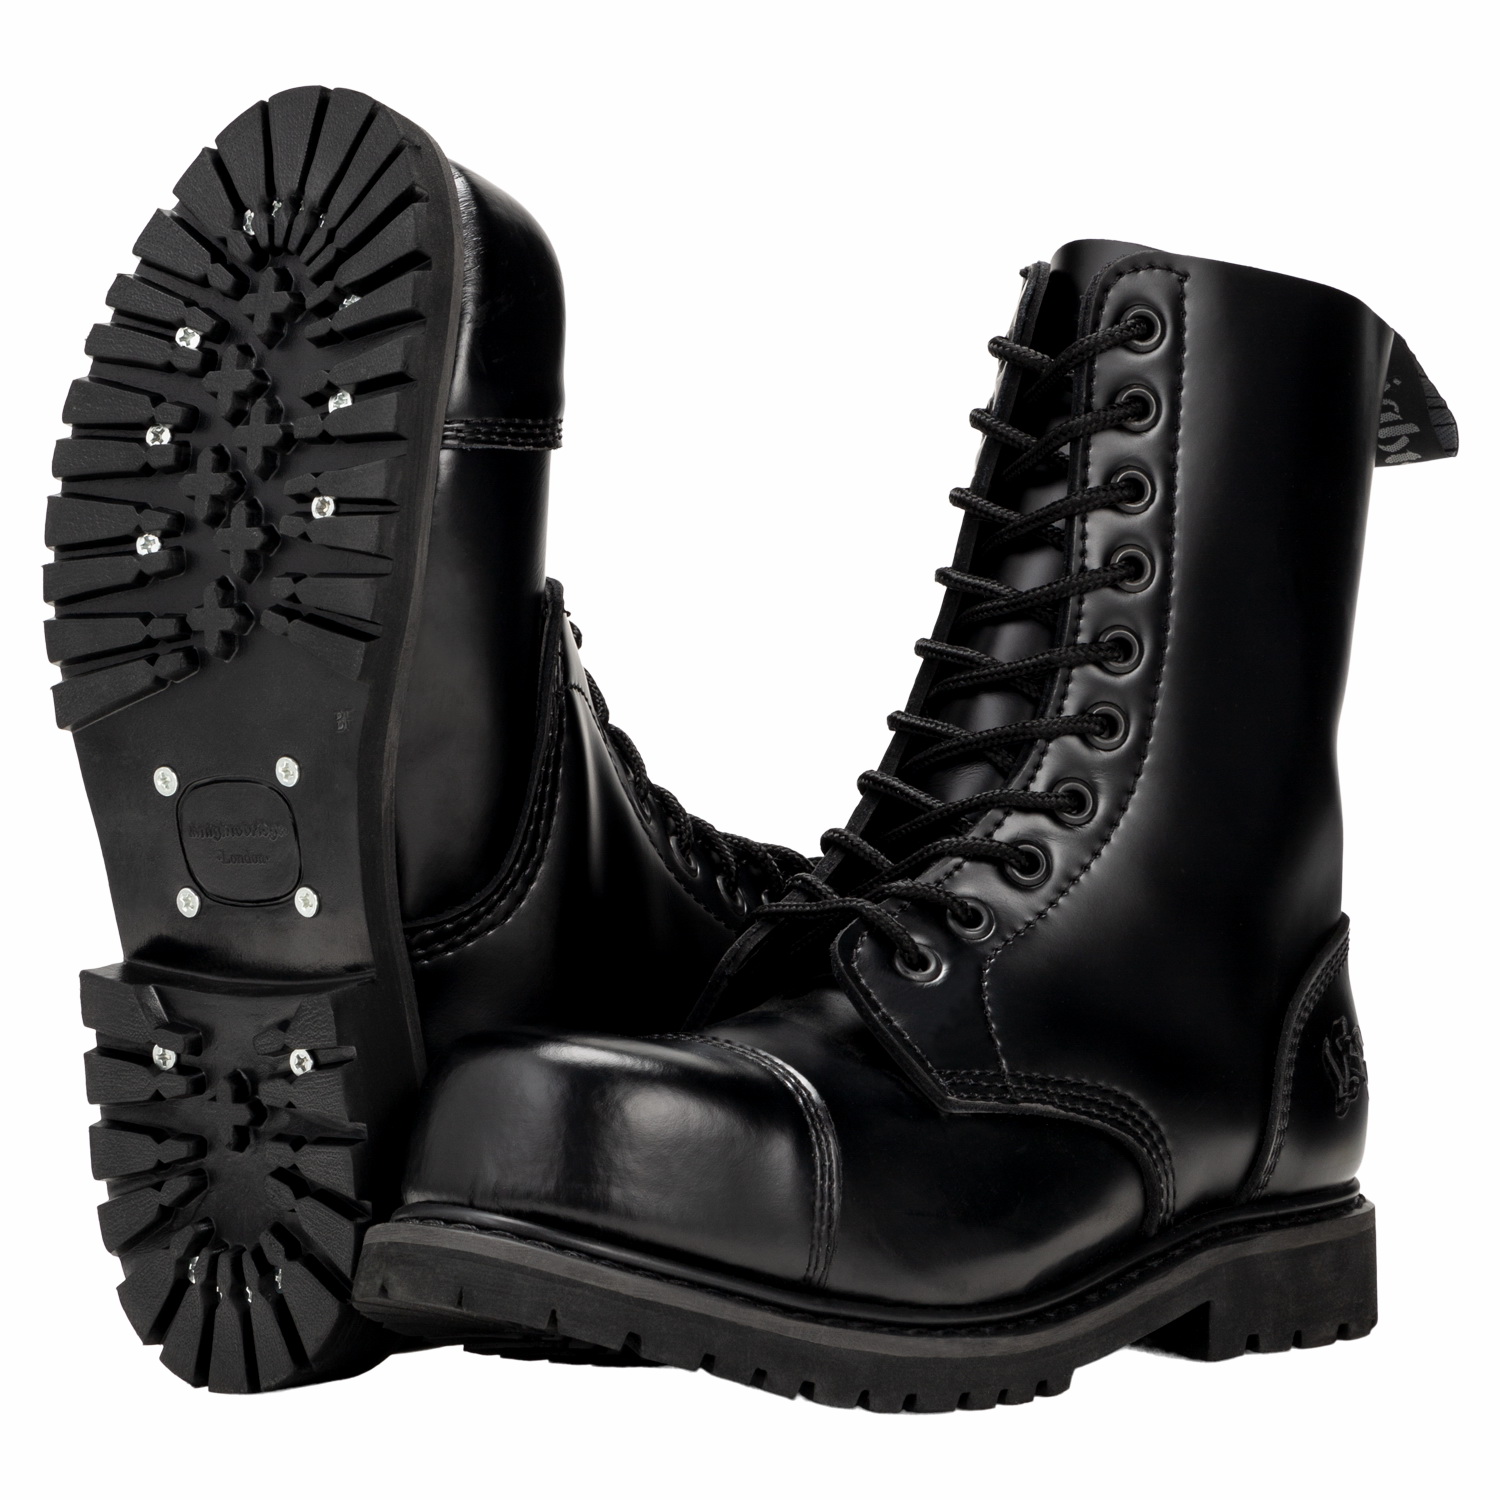 10 Loch Ranger Boots UK Gothic Style